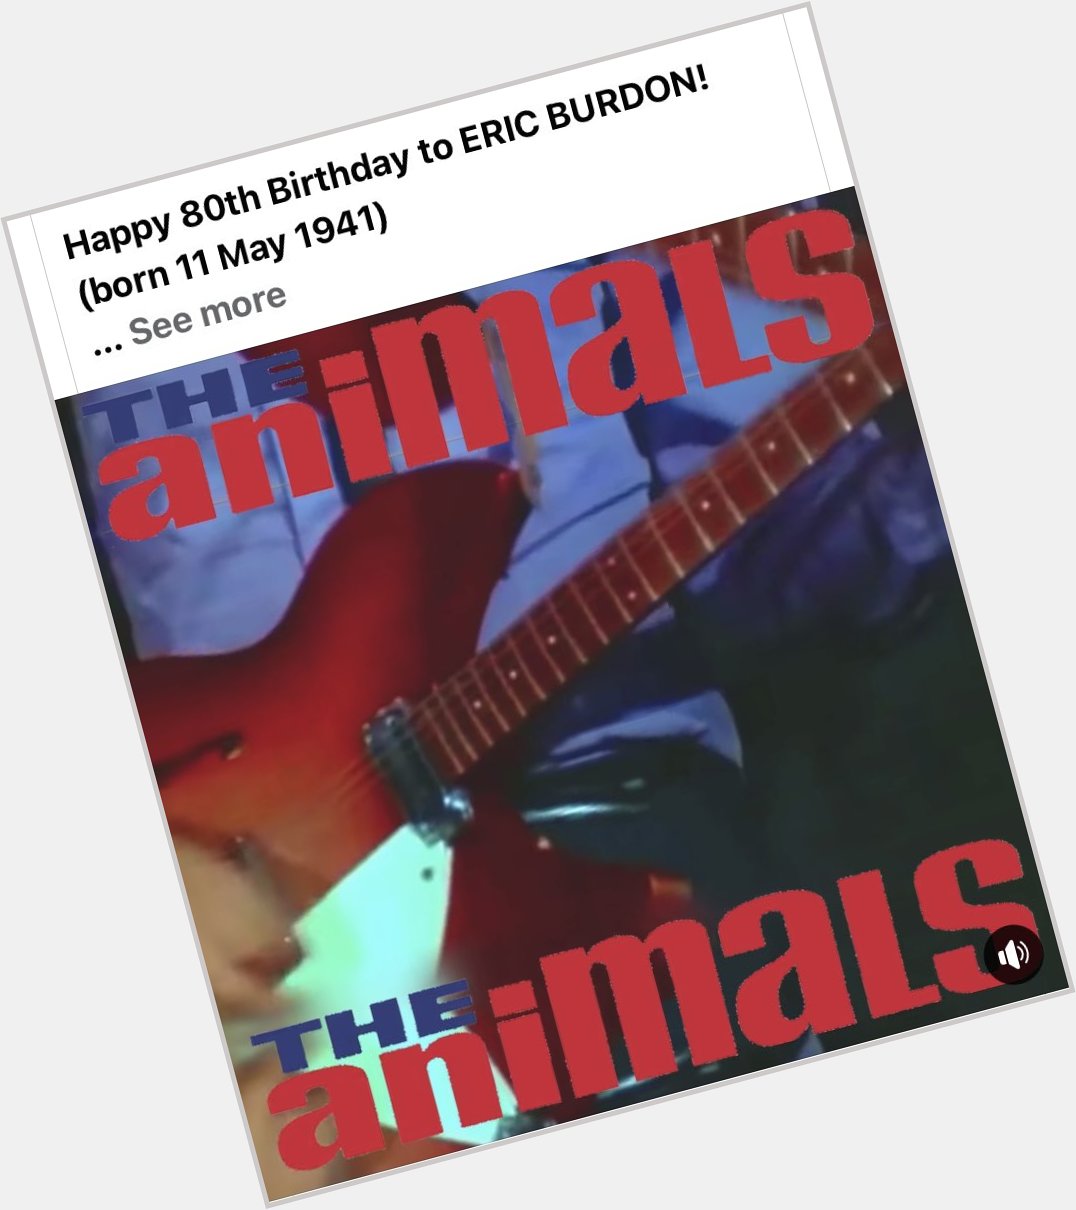 Happy birthday Eric Burdon 